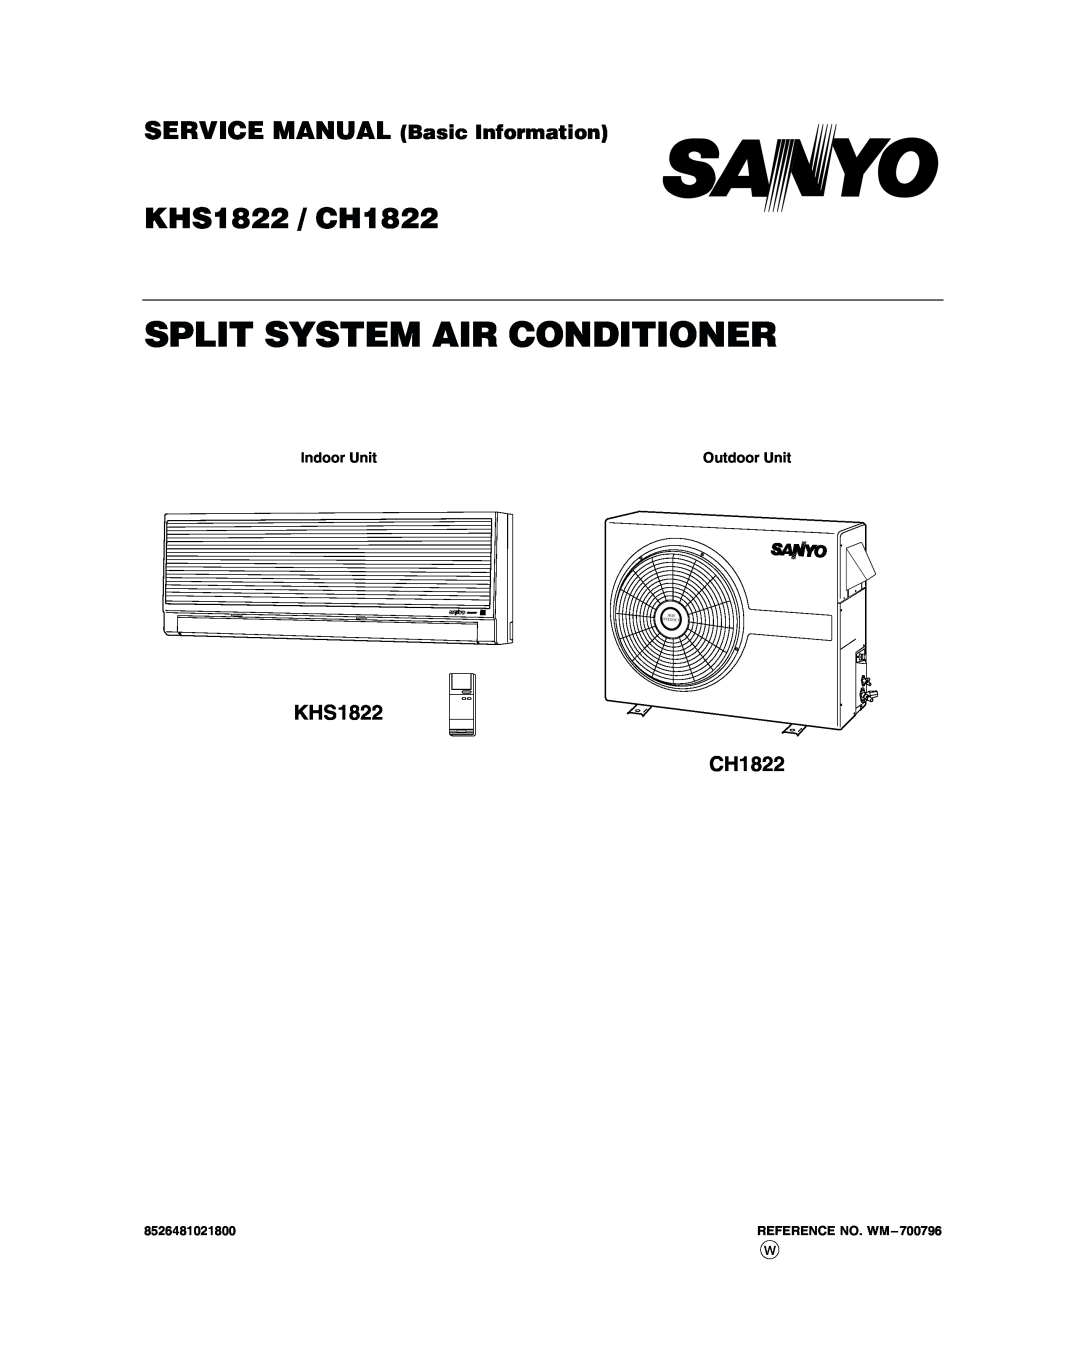 Sanyo warranty Dimensional Data, Indoor Unit: KHS1822, Outdoor Unit CH1822, Warranty, Sanyo Fisher Company 